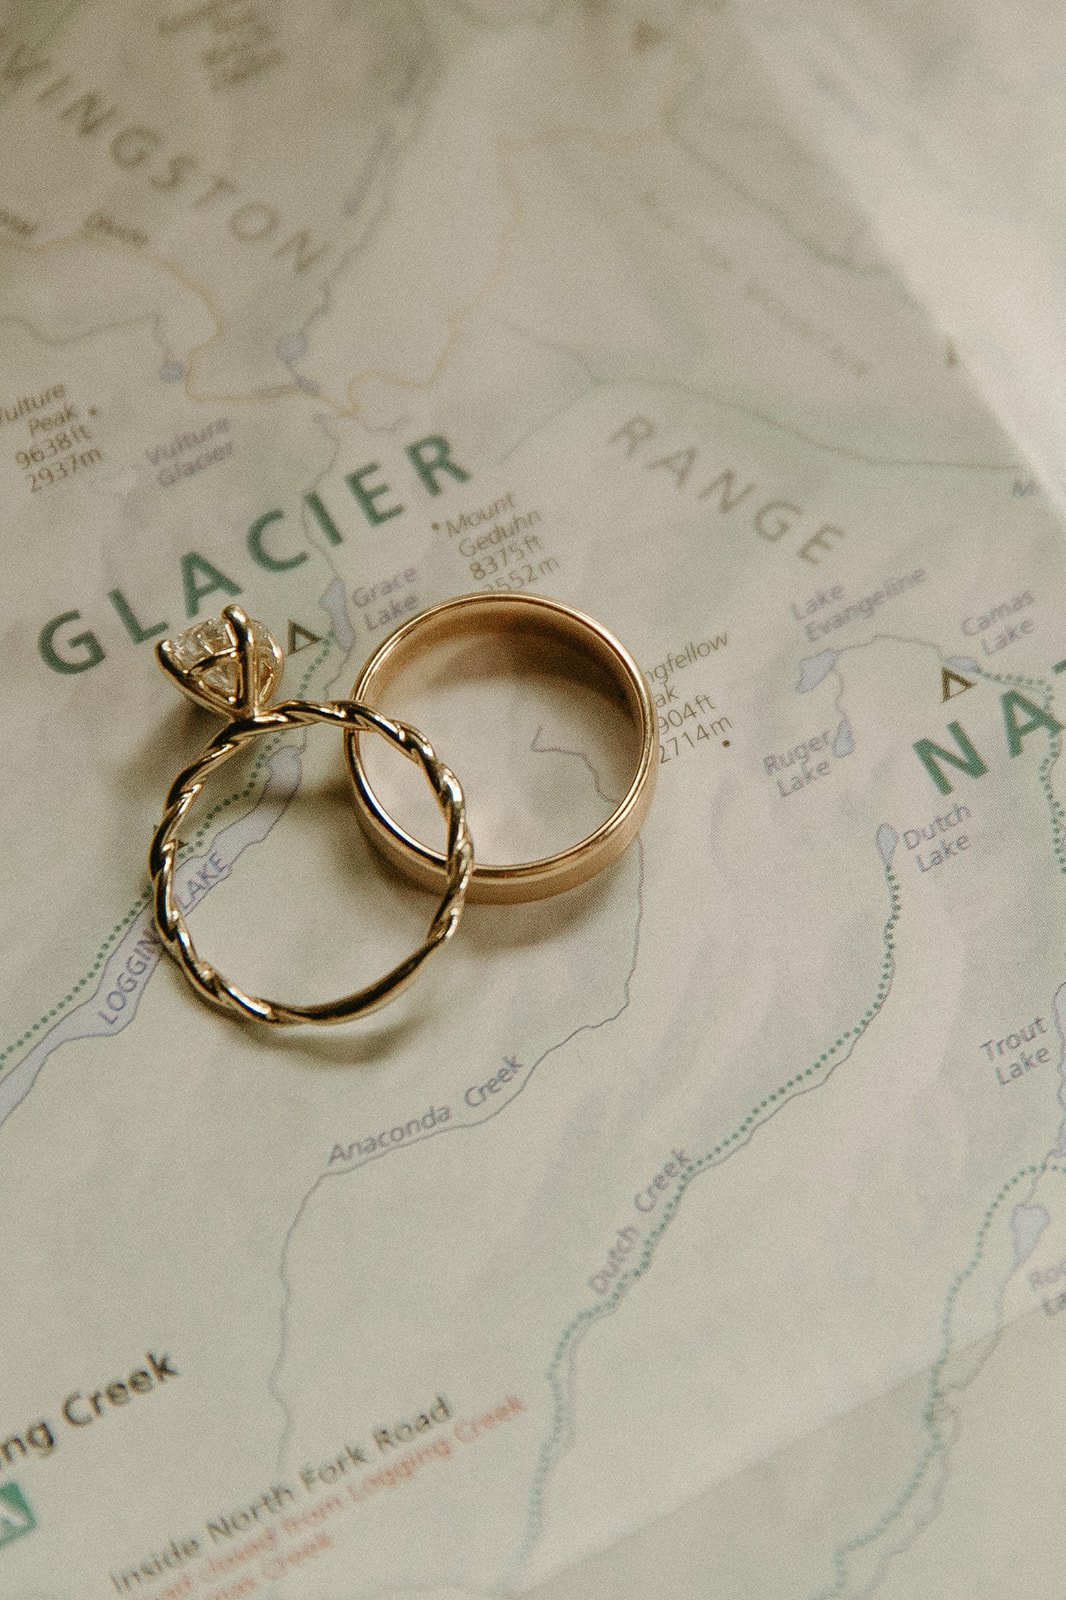 Wedding rings on Glacier national park map